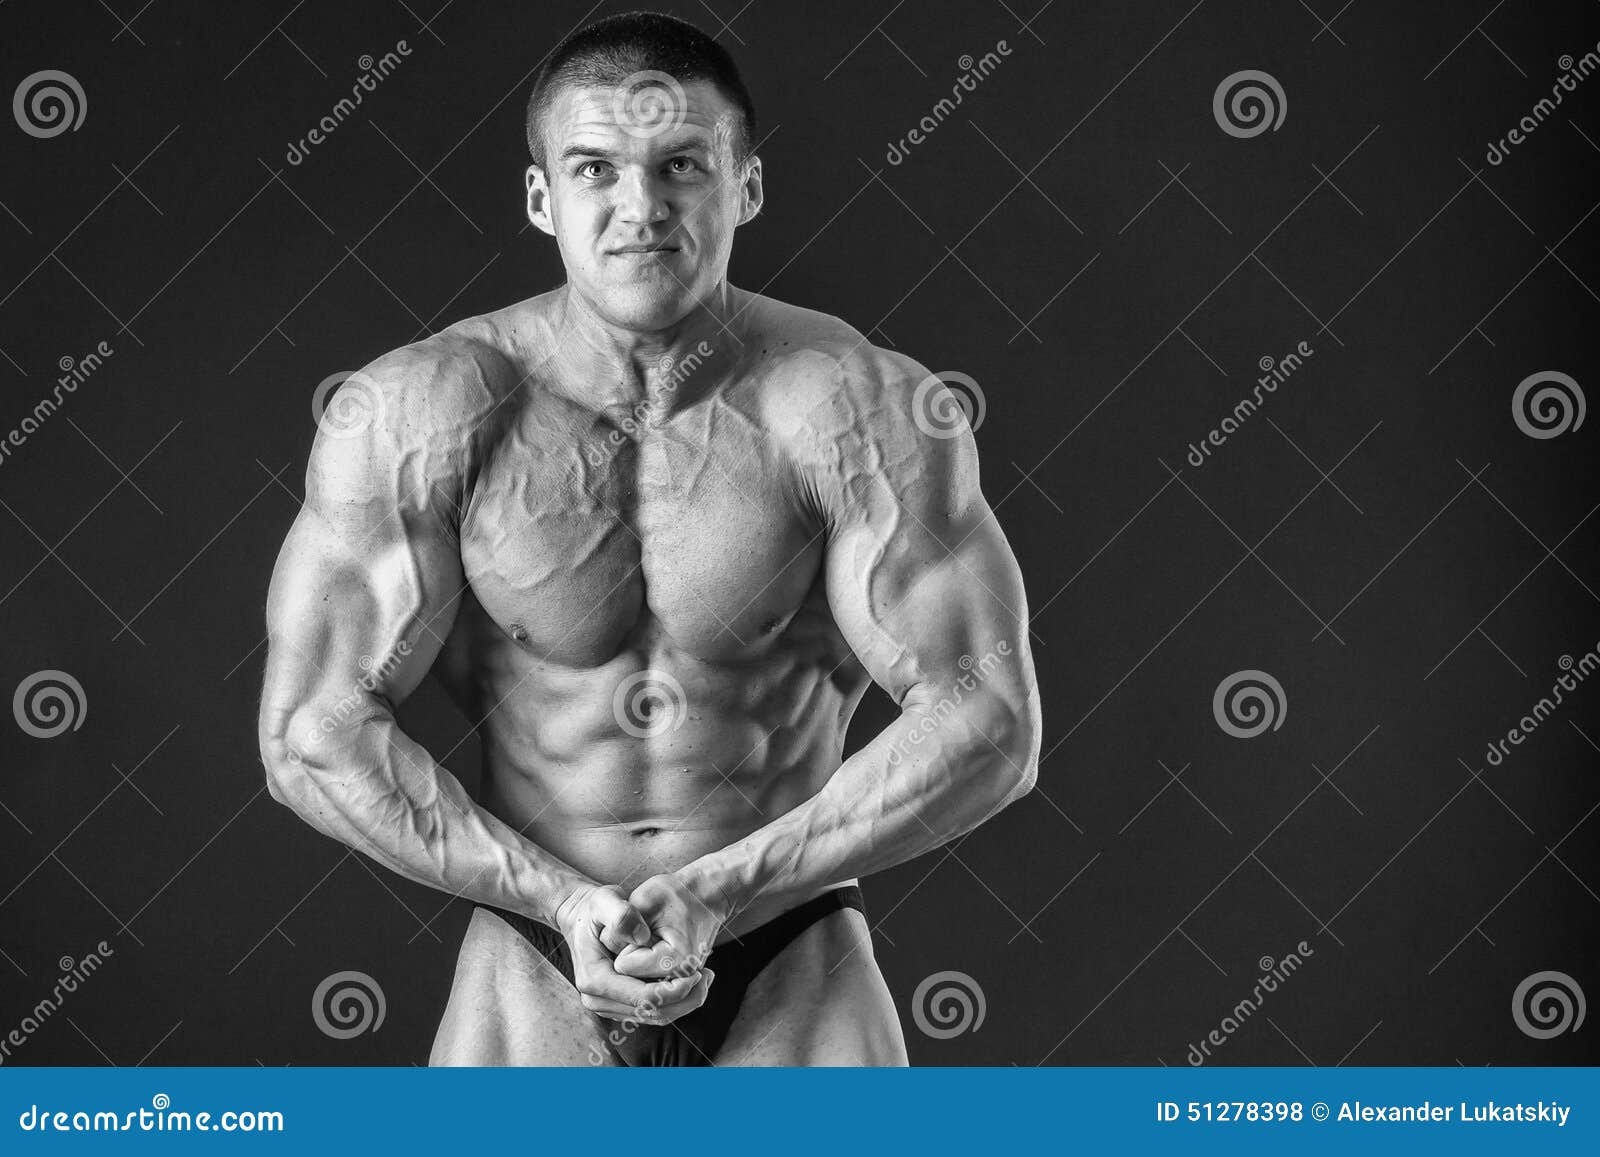 Bodybuilder stock photo. Image of adult, exercise, leisure - 51278398